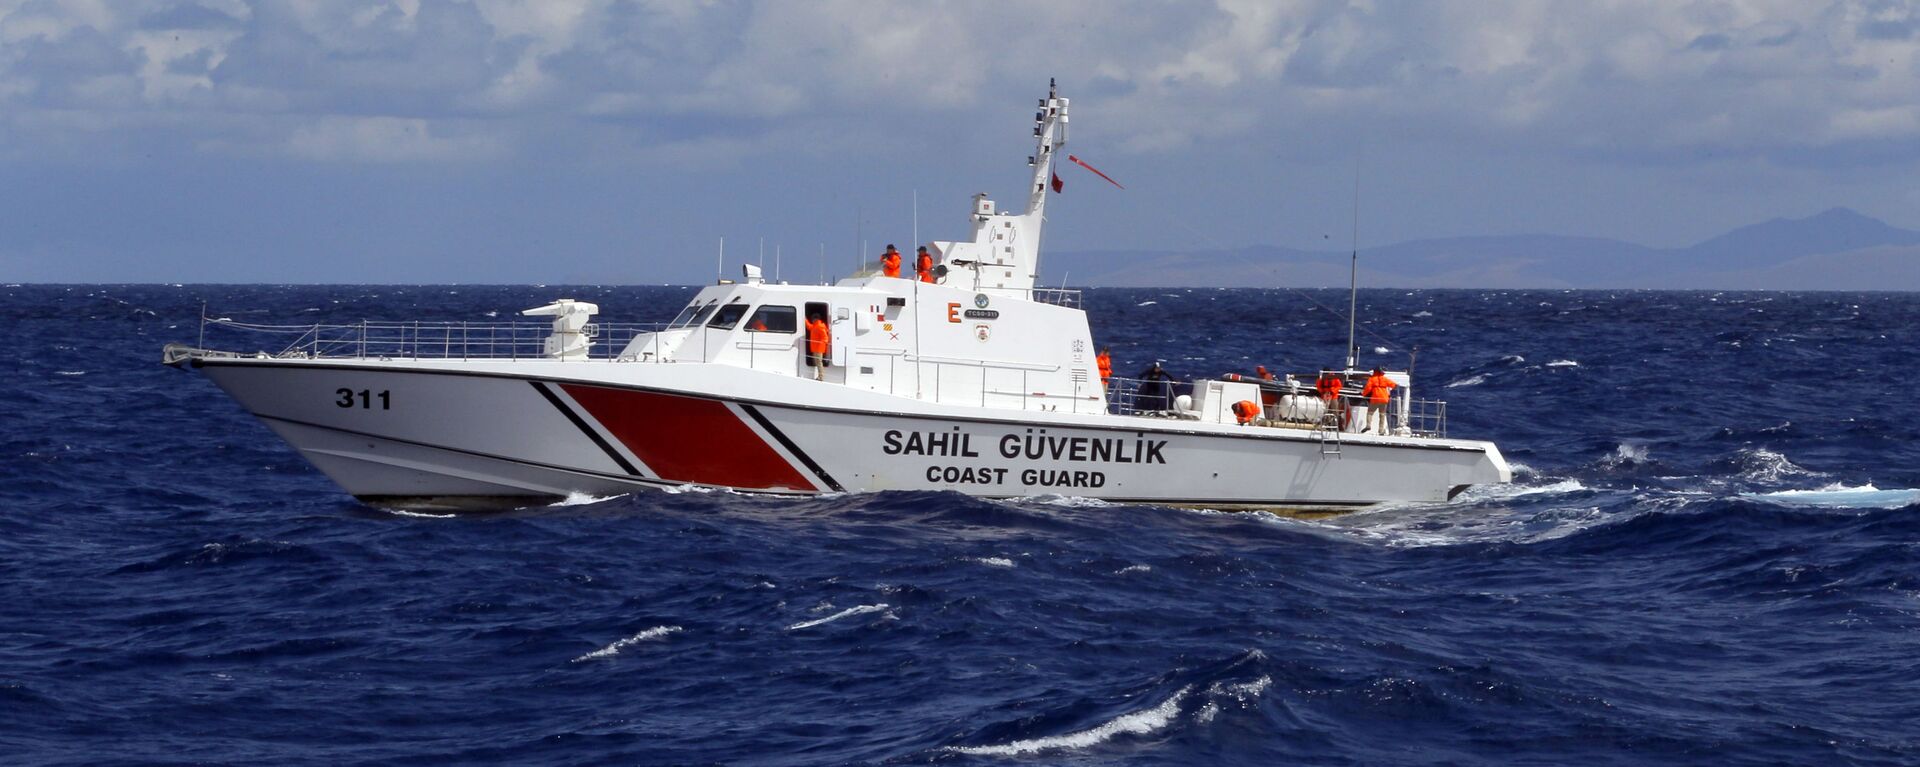 A Turkish Coast Guard vessel speeds during an exercise by the Turkish Coast Guard on the Aegean Sea near Izmir, Turkey, Wednesday, May 4, 2016 - Sputnik International, 1920, 06.10.2022